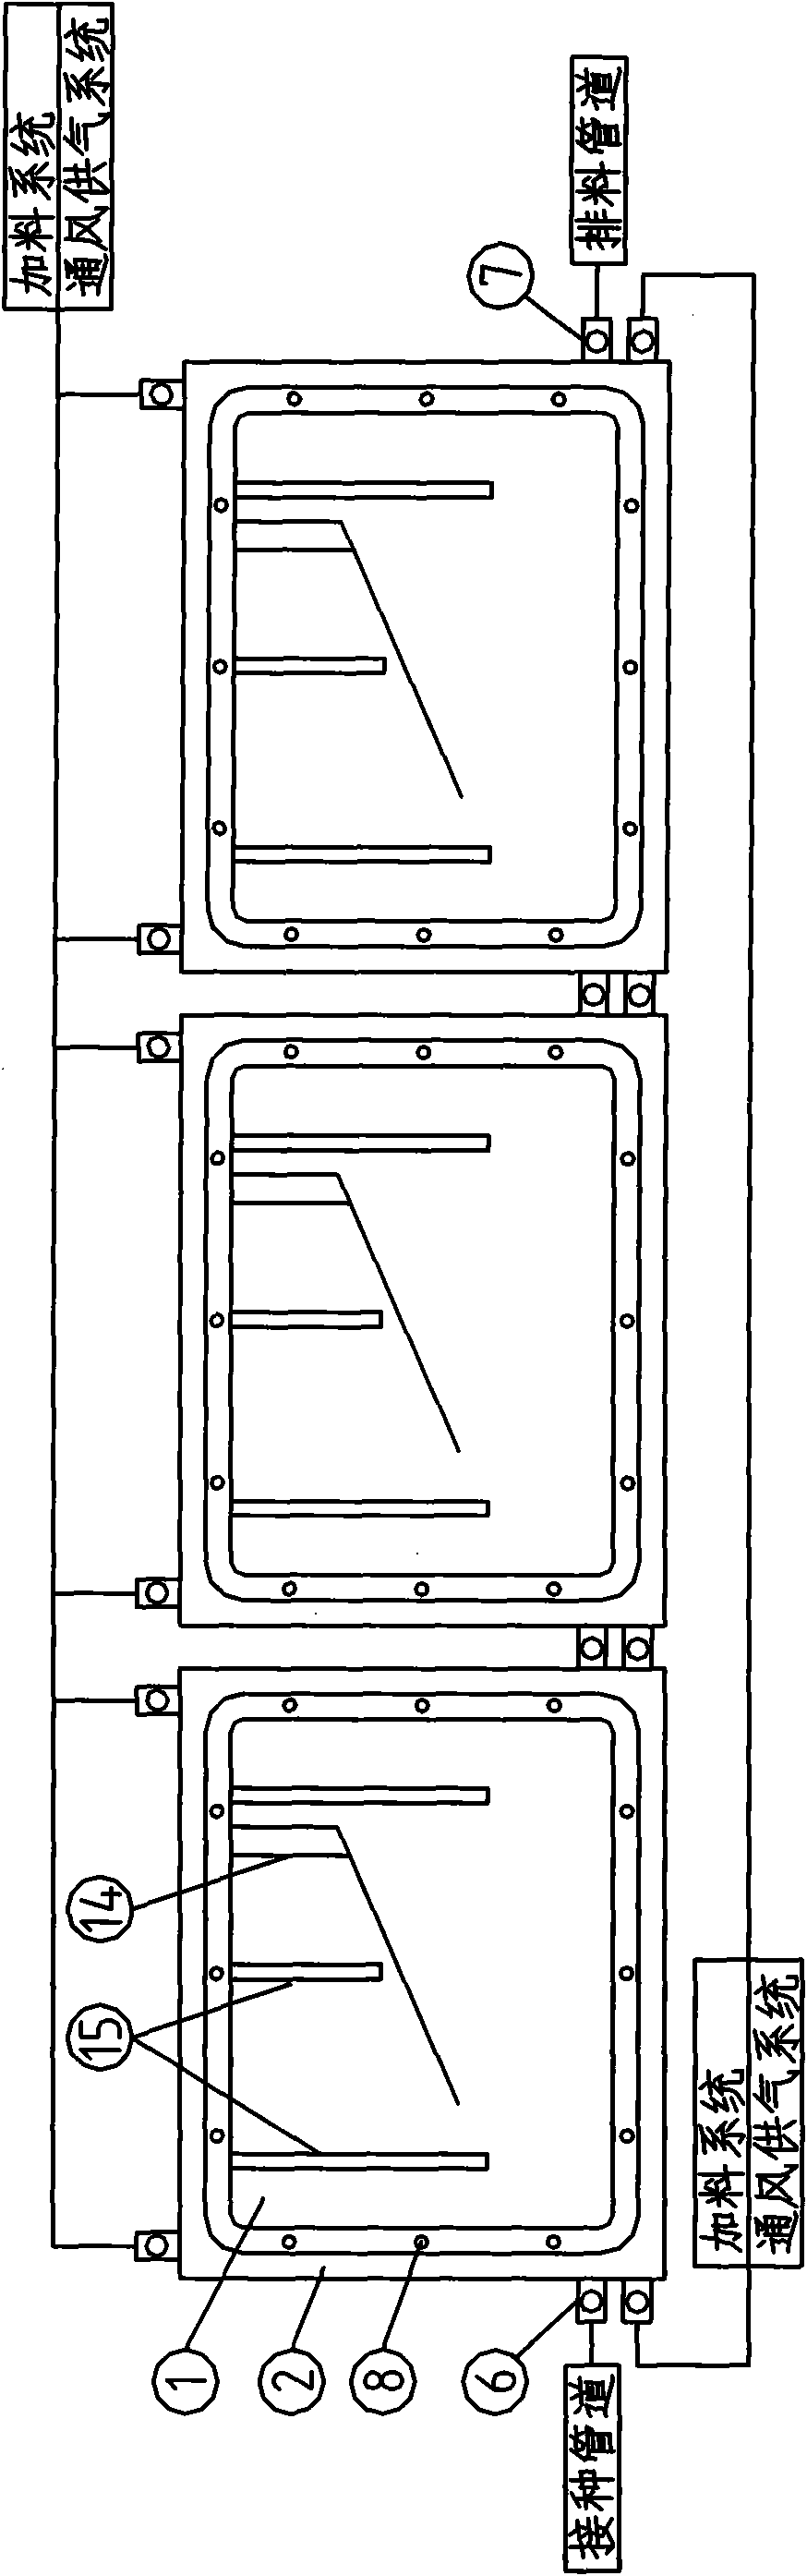 Assembled flat-plate photobioreactor